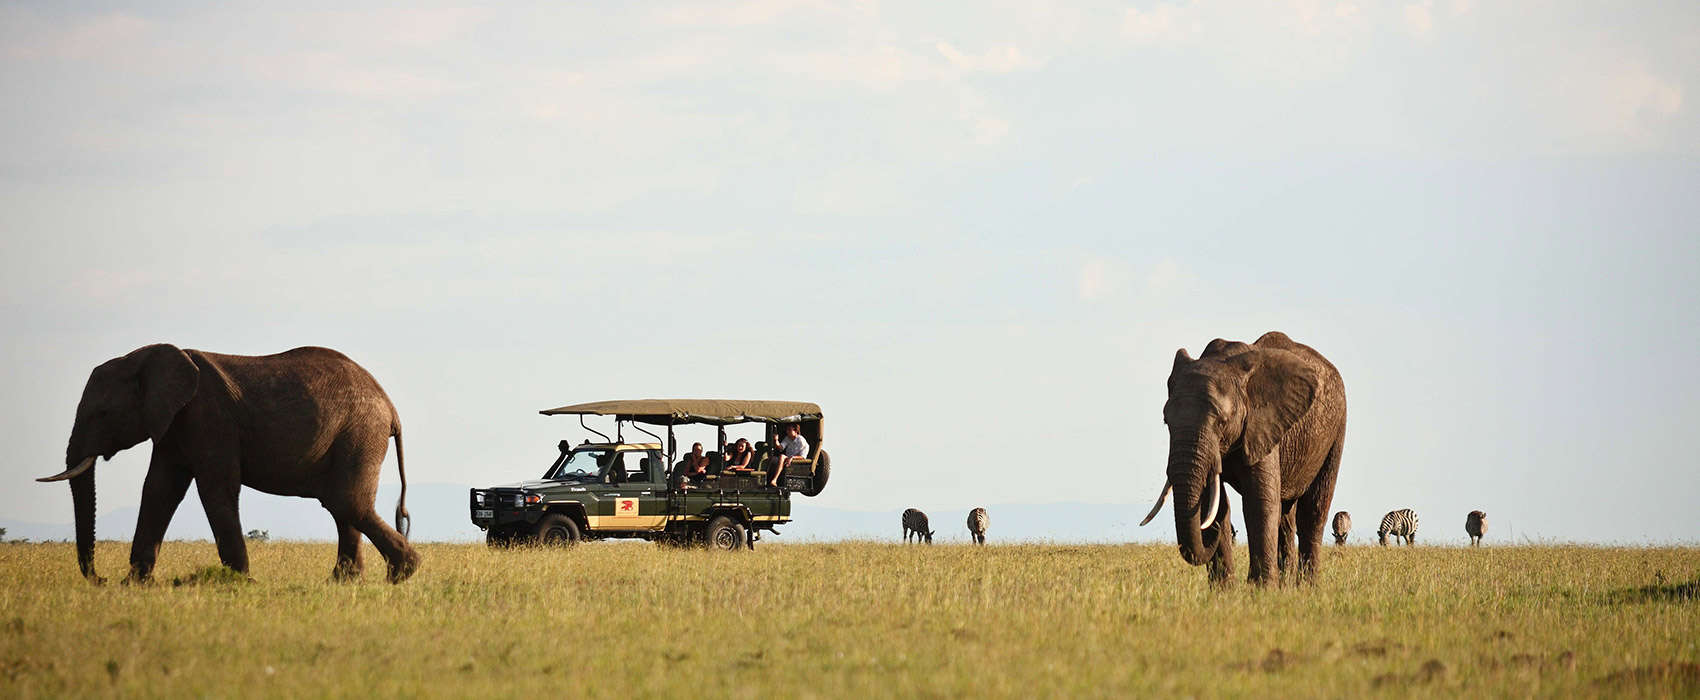 African Masai Mara Safari elephant